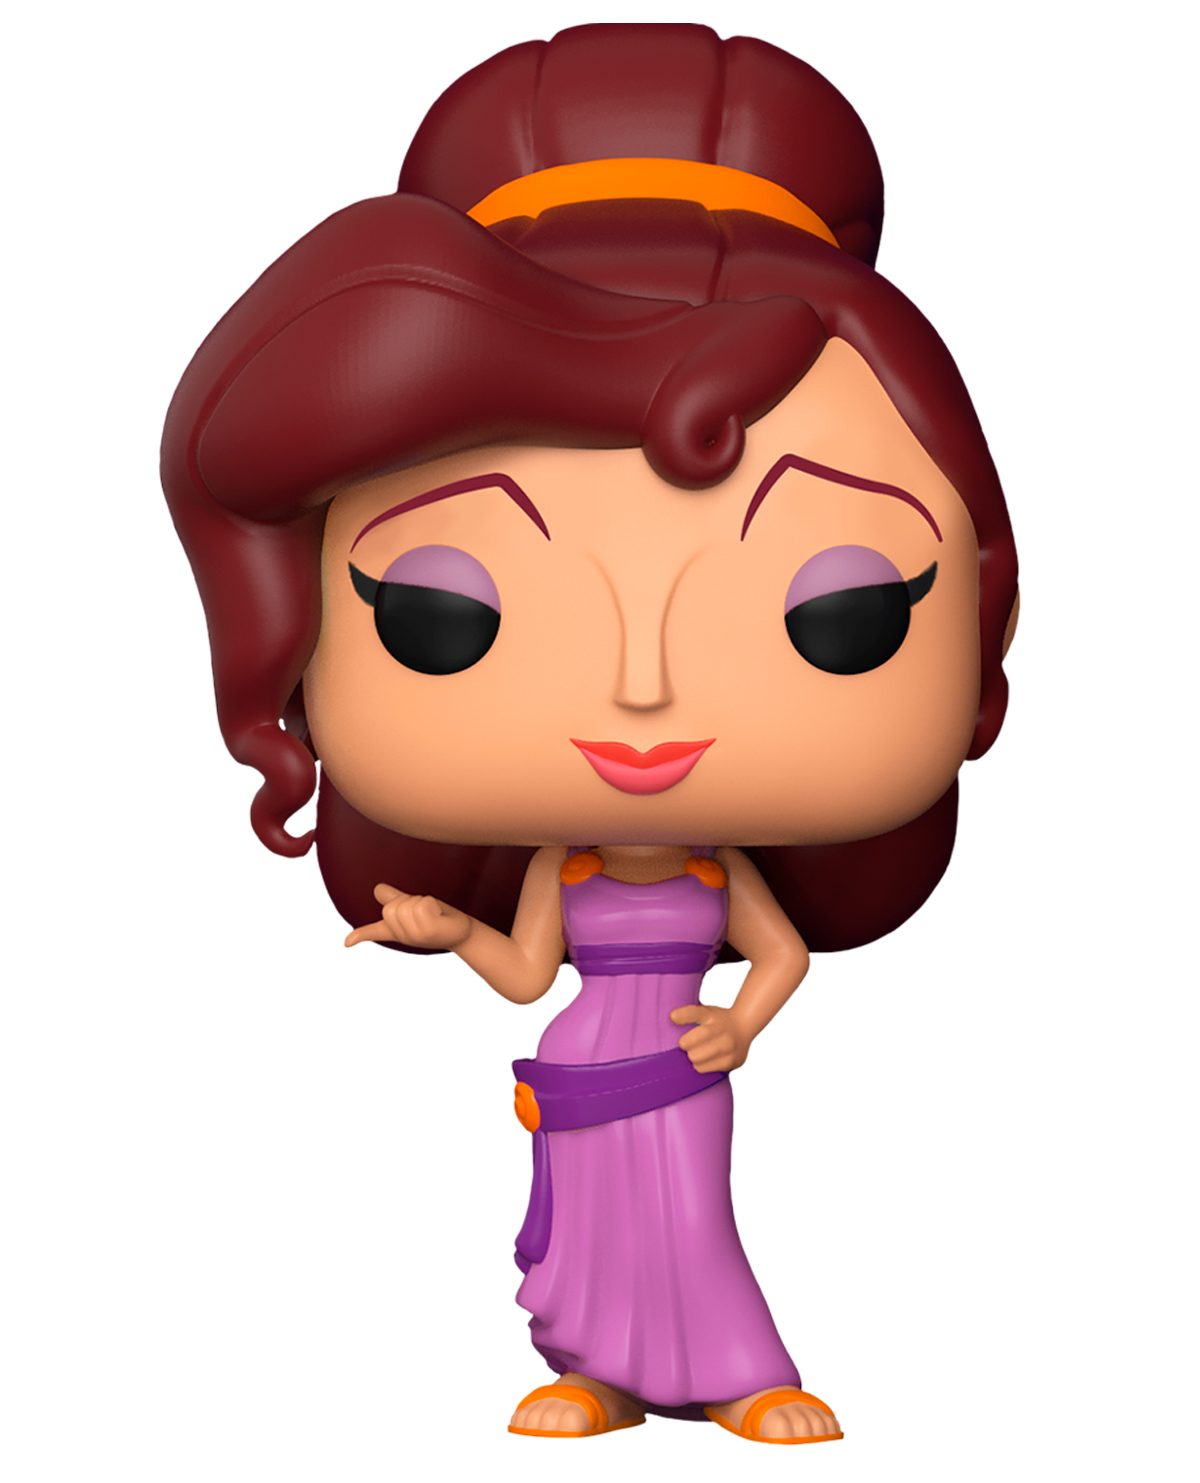 Funko Pop Disney: Hercules - Meg